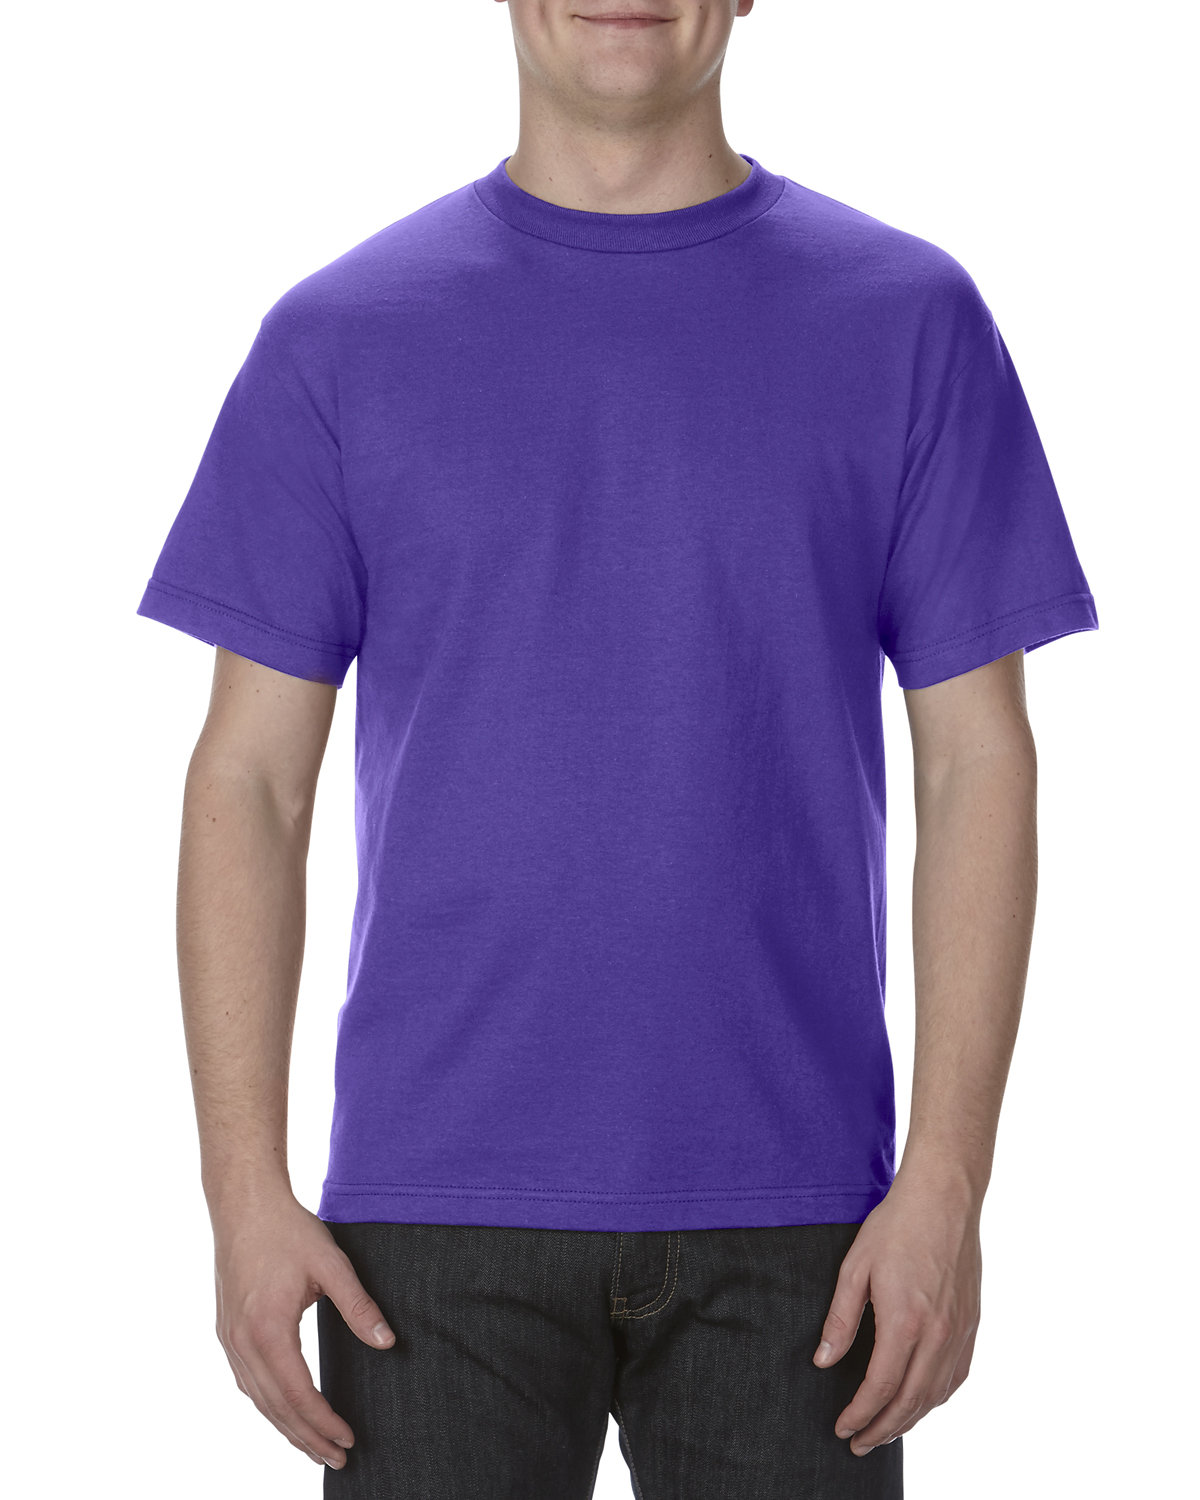 American Apparel Unisex Heavyweight Cotton T-Shirt purple 